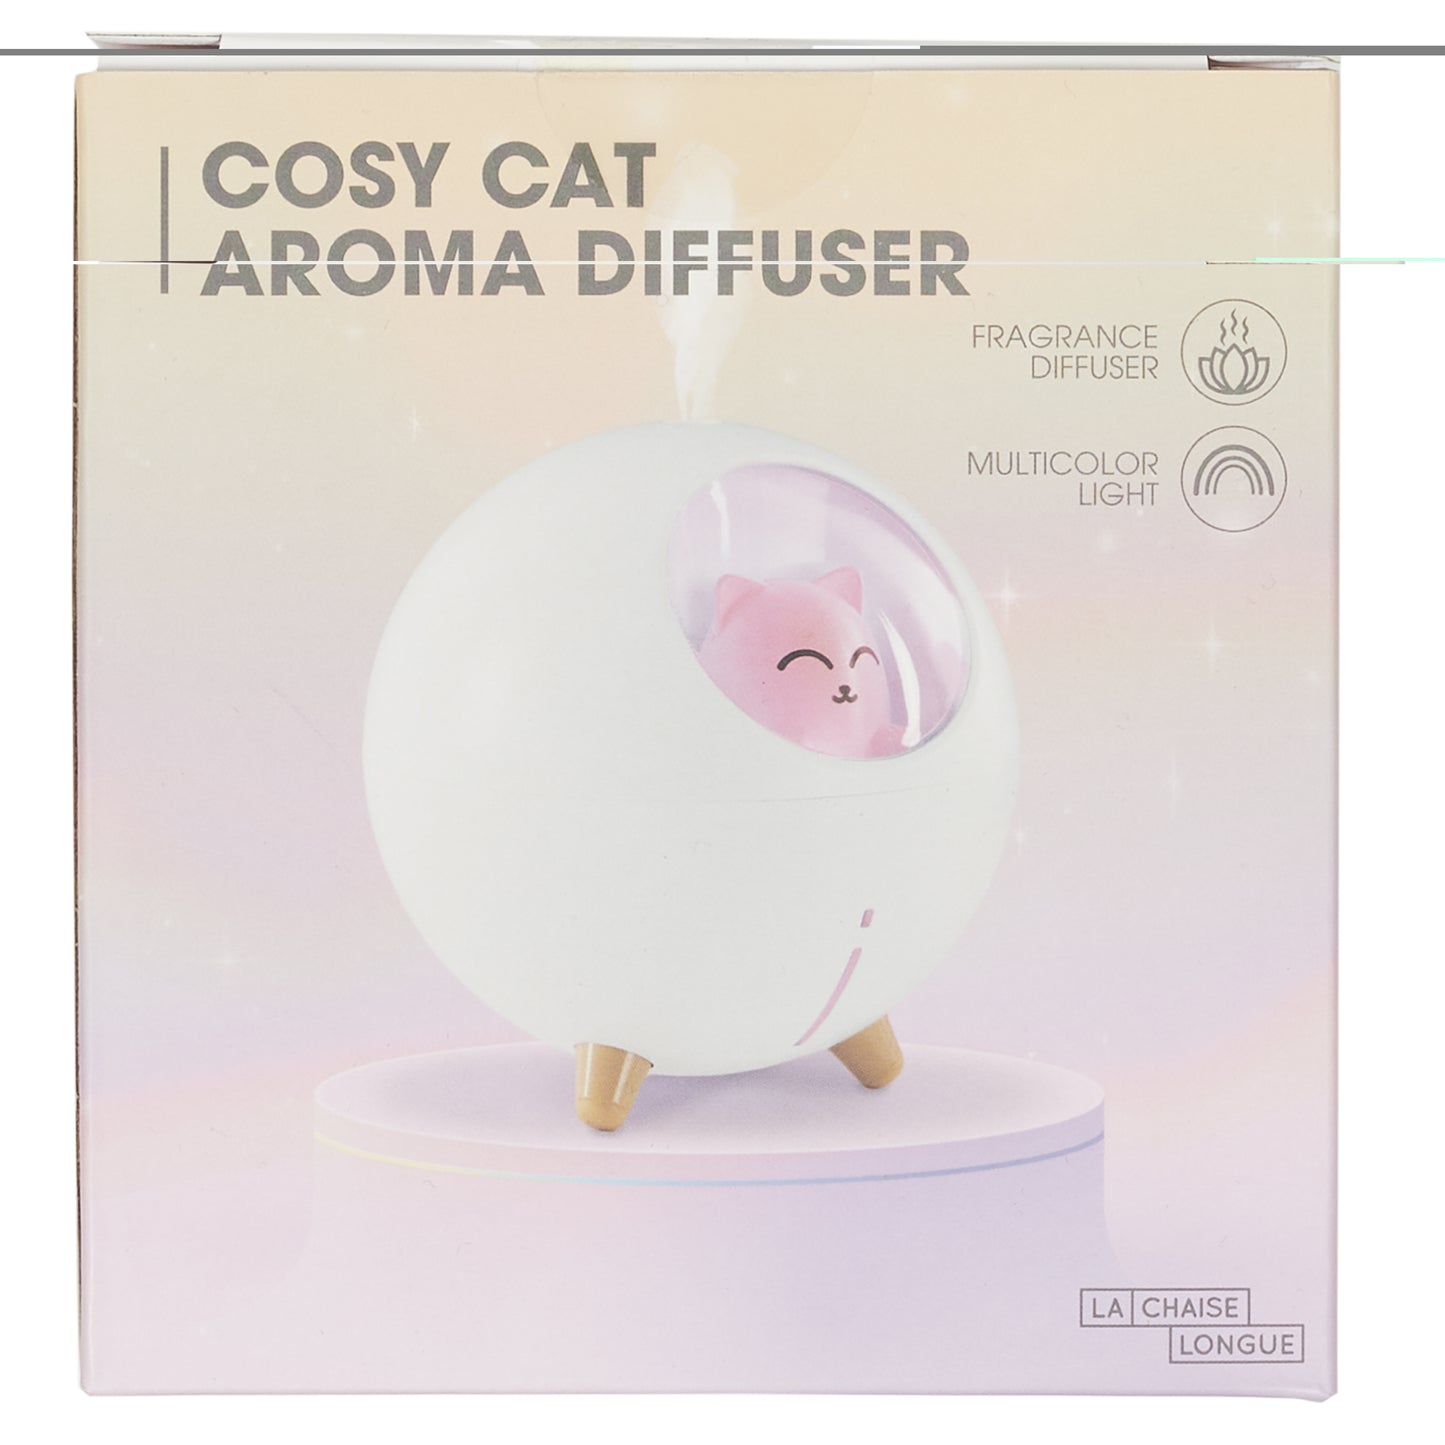 AROMA DIFFUSEUR COSY CAT